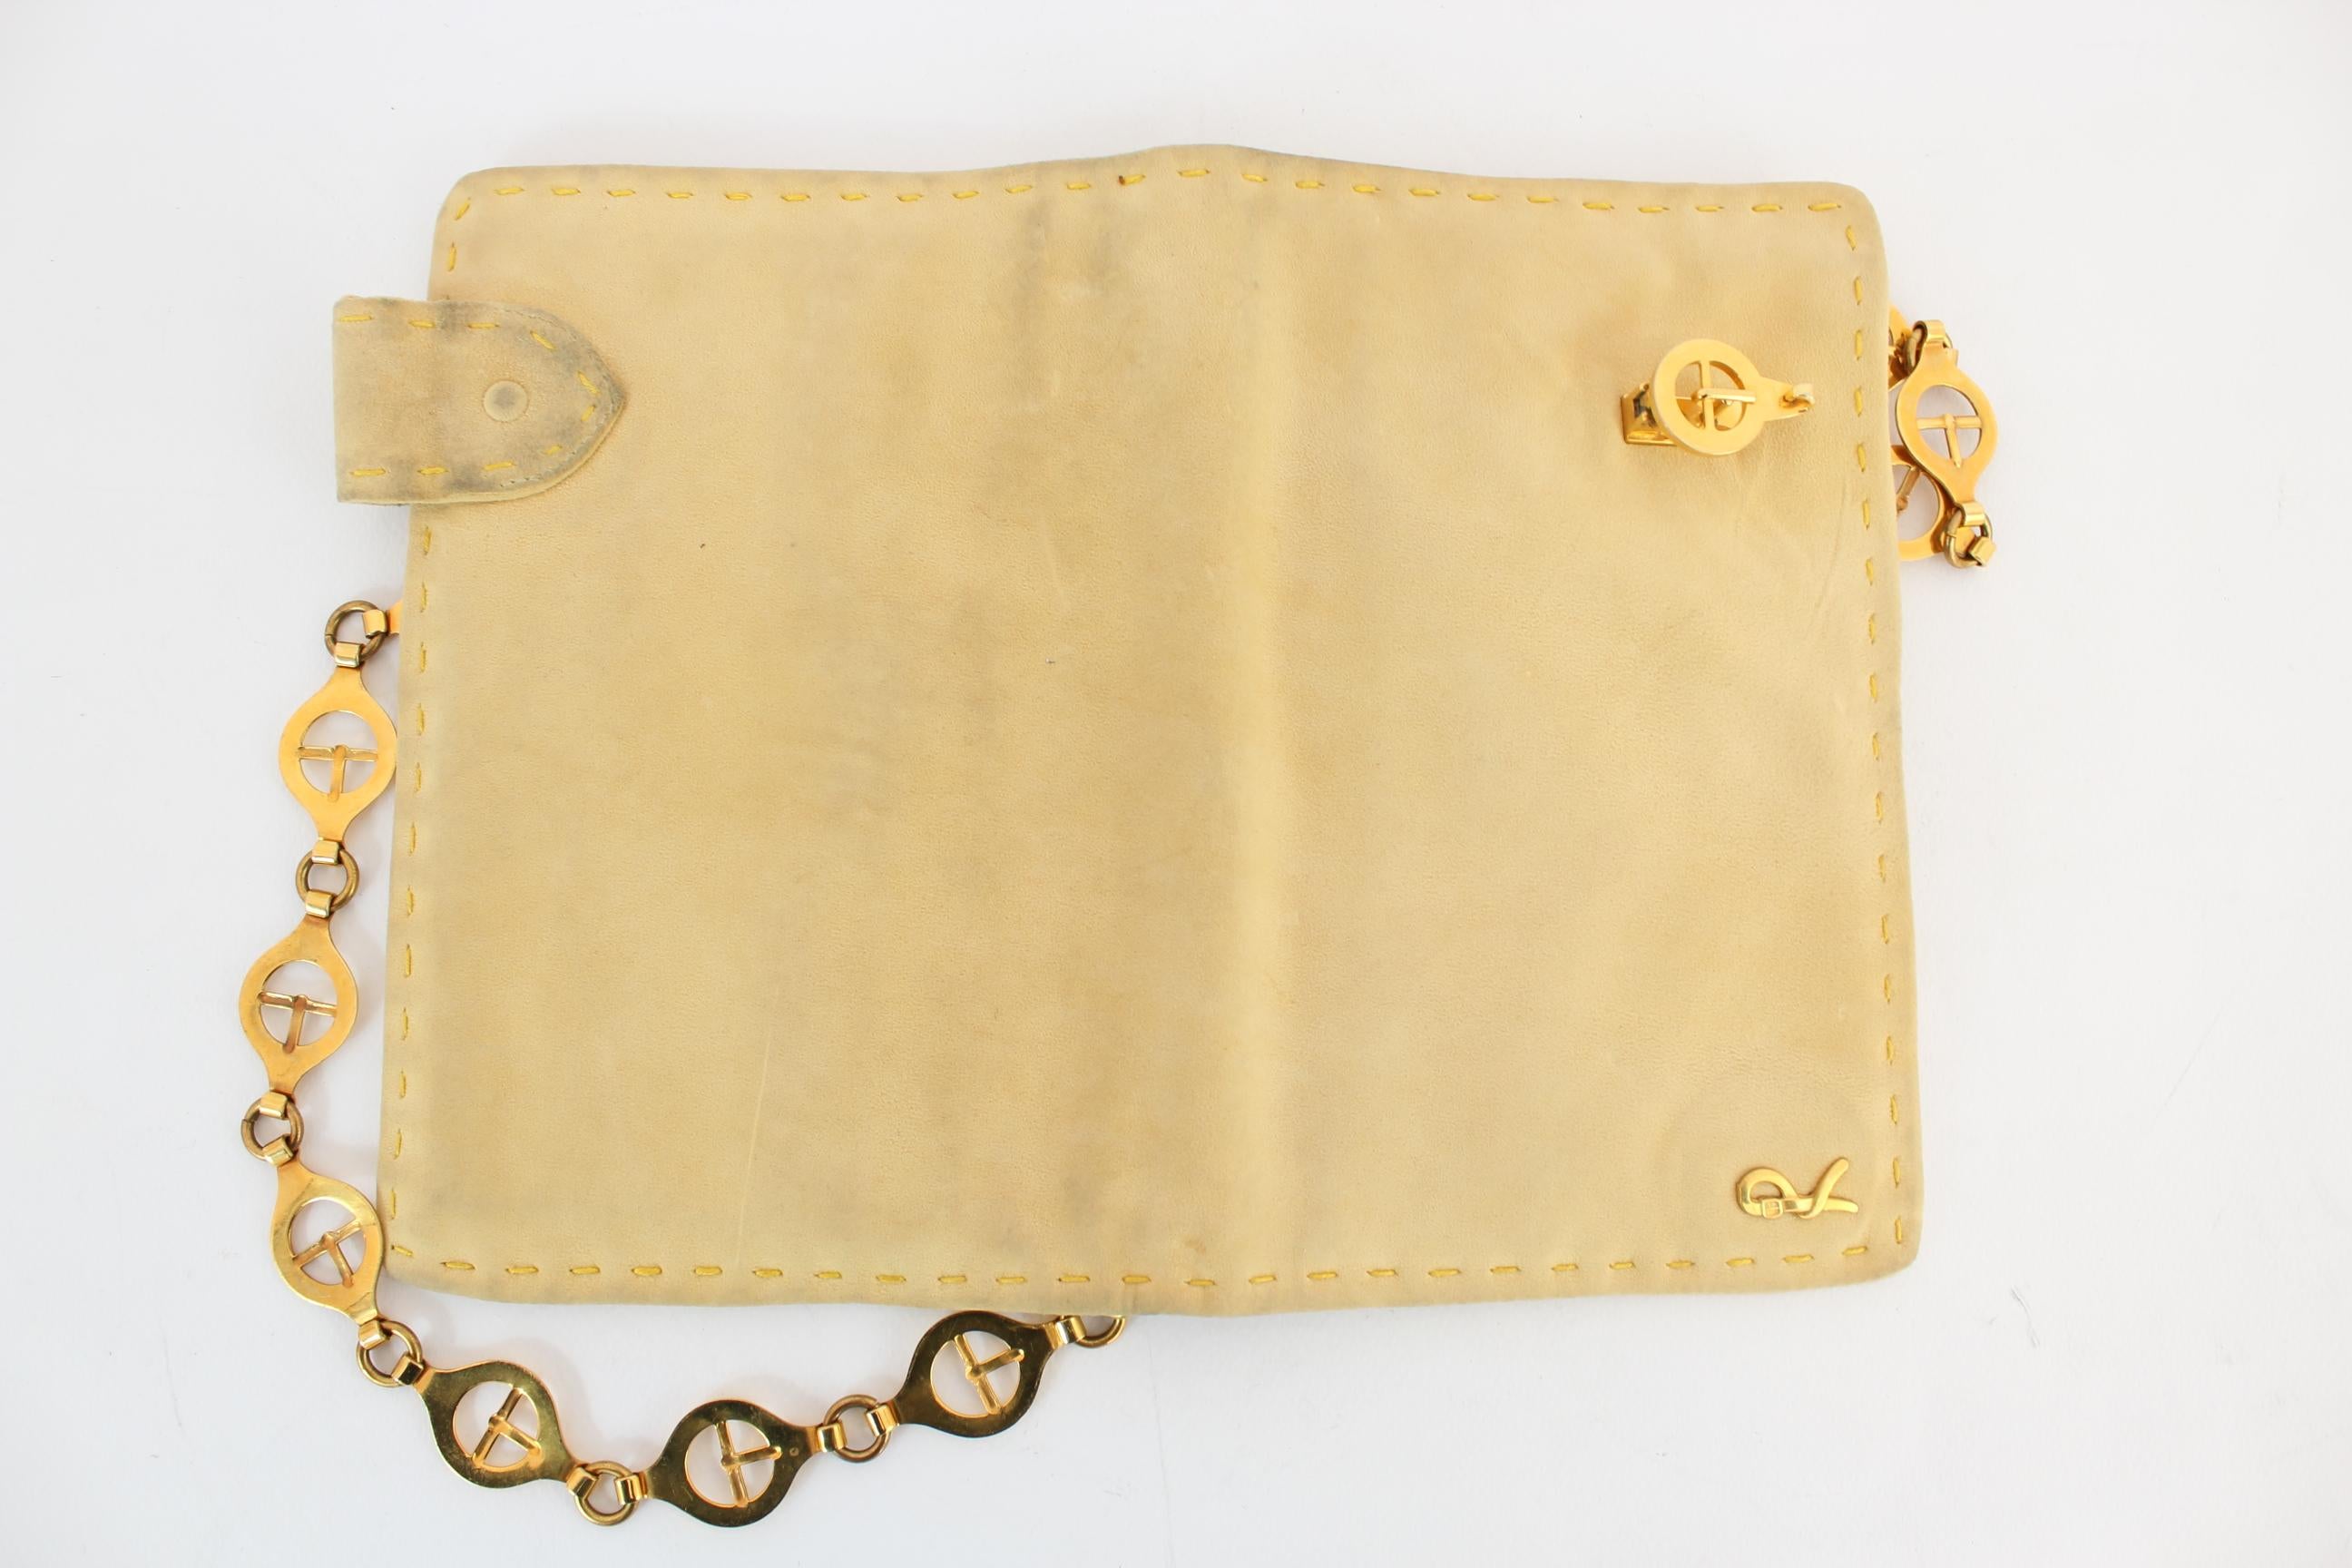 Roberta di Camerino Leather Suede Beige Golden Chain Strap Shoulder Bag 1990s 1